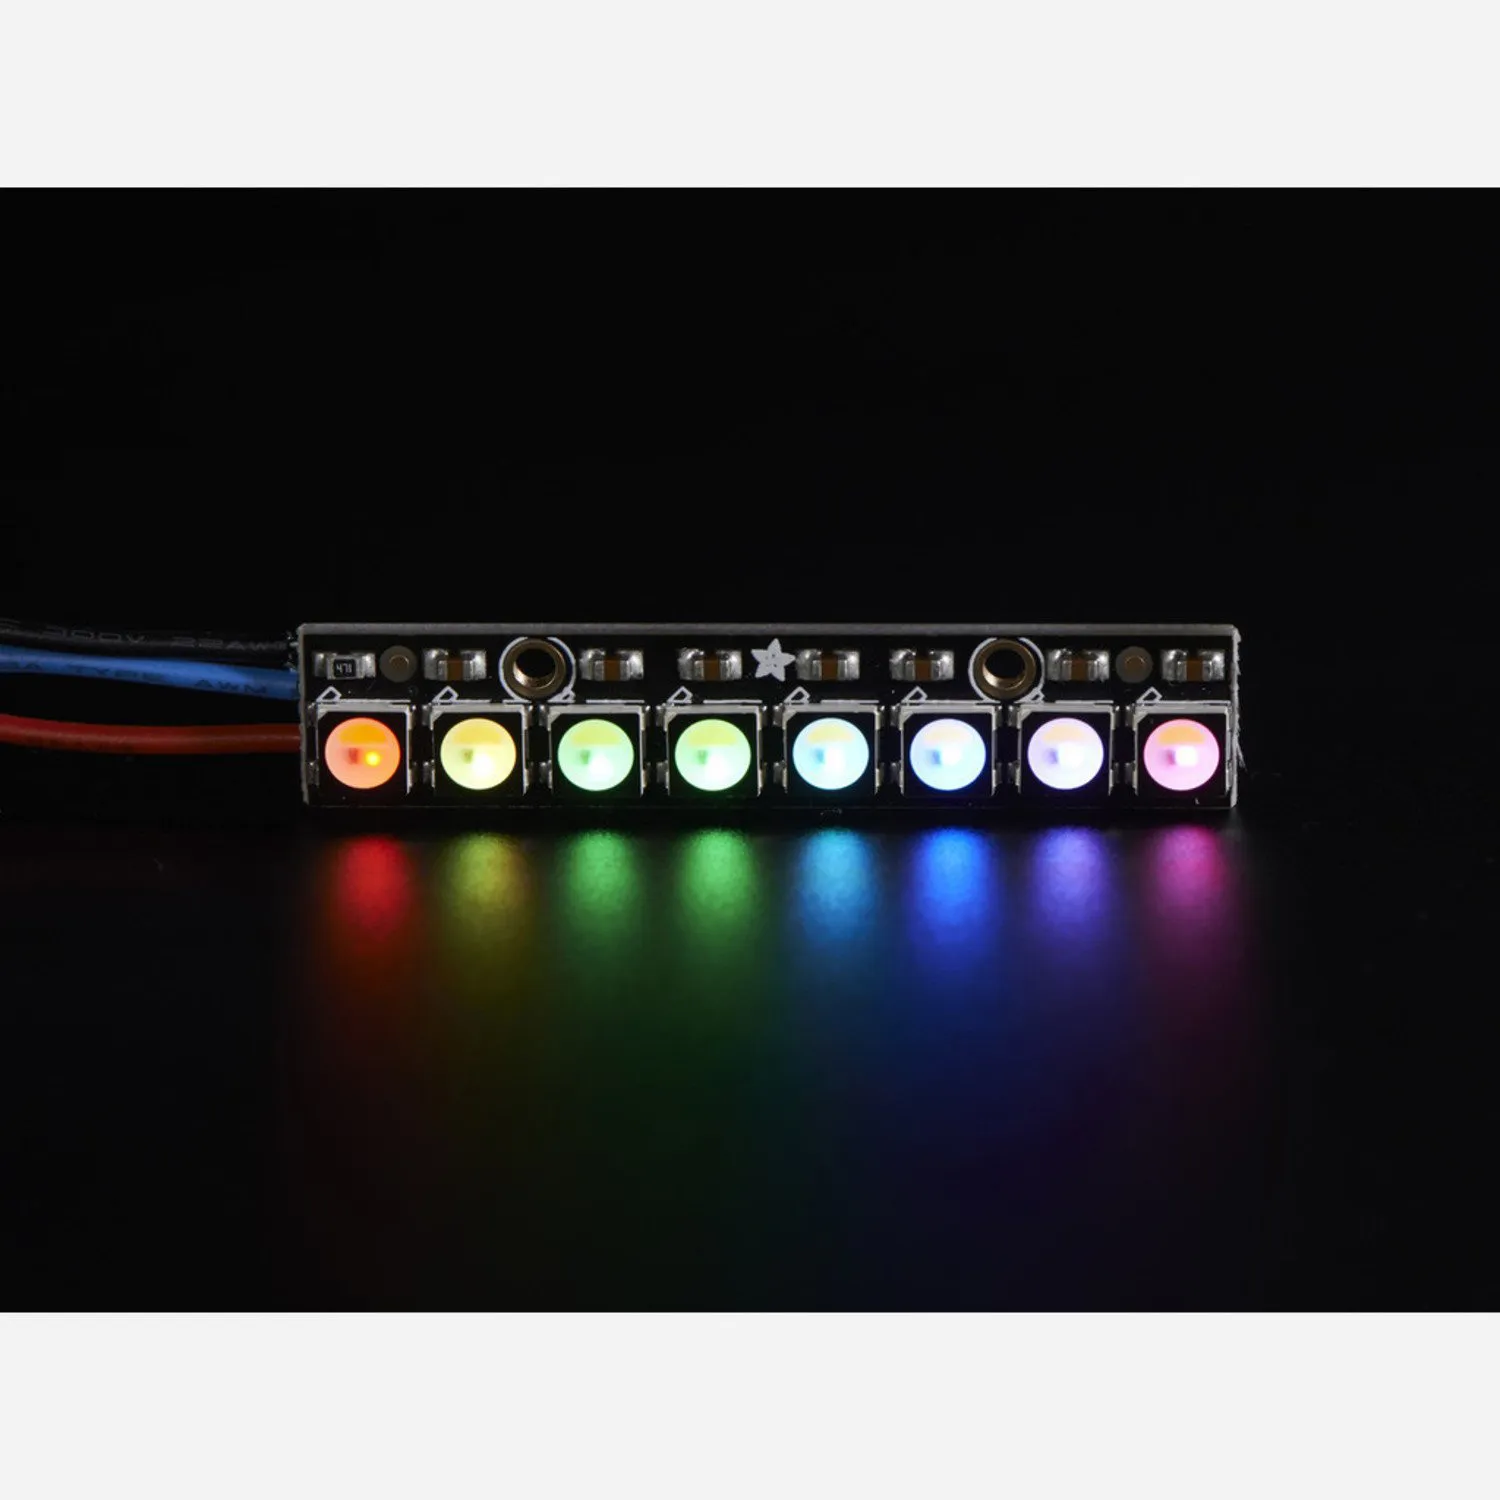 Photo of NeoPixel Stick - 8 x 5050 RGBW LEDs - Natural White - ~4500K